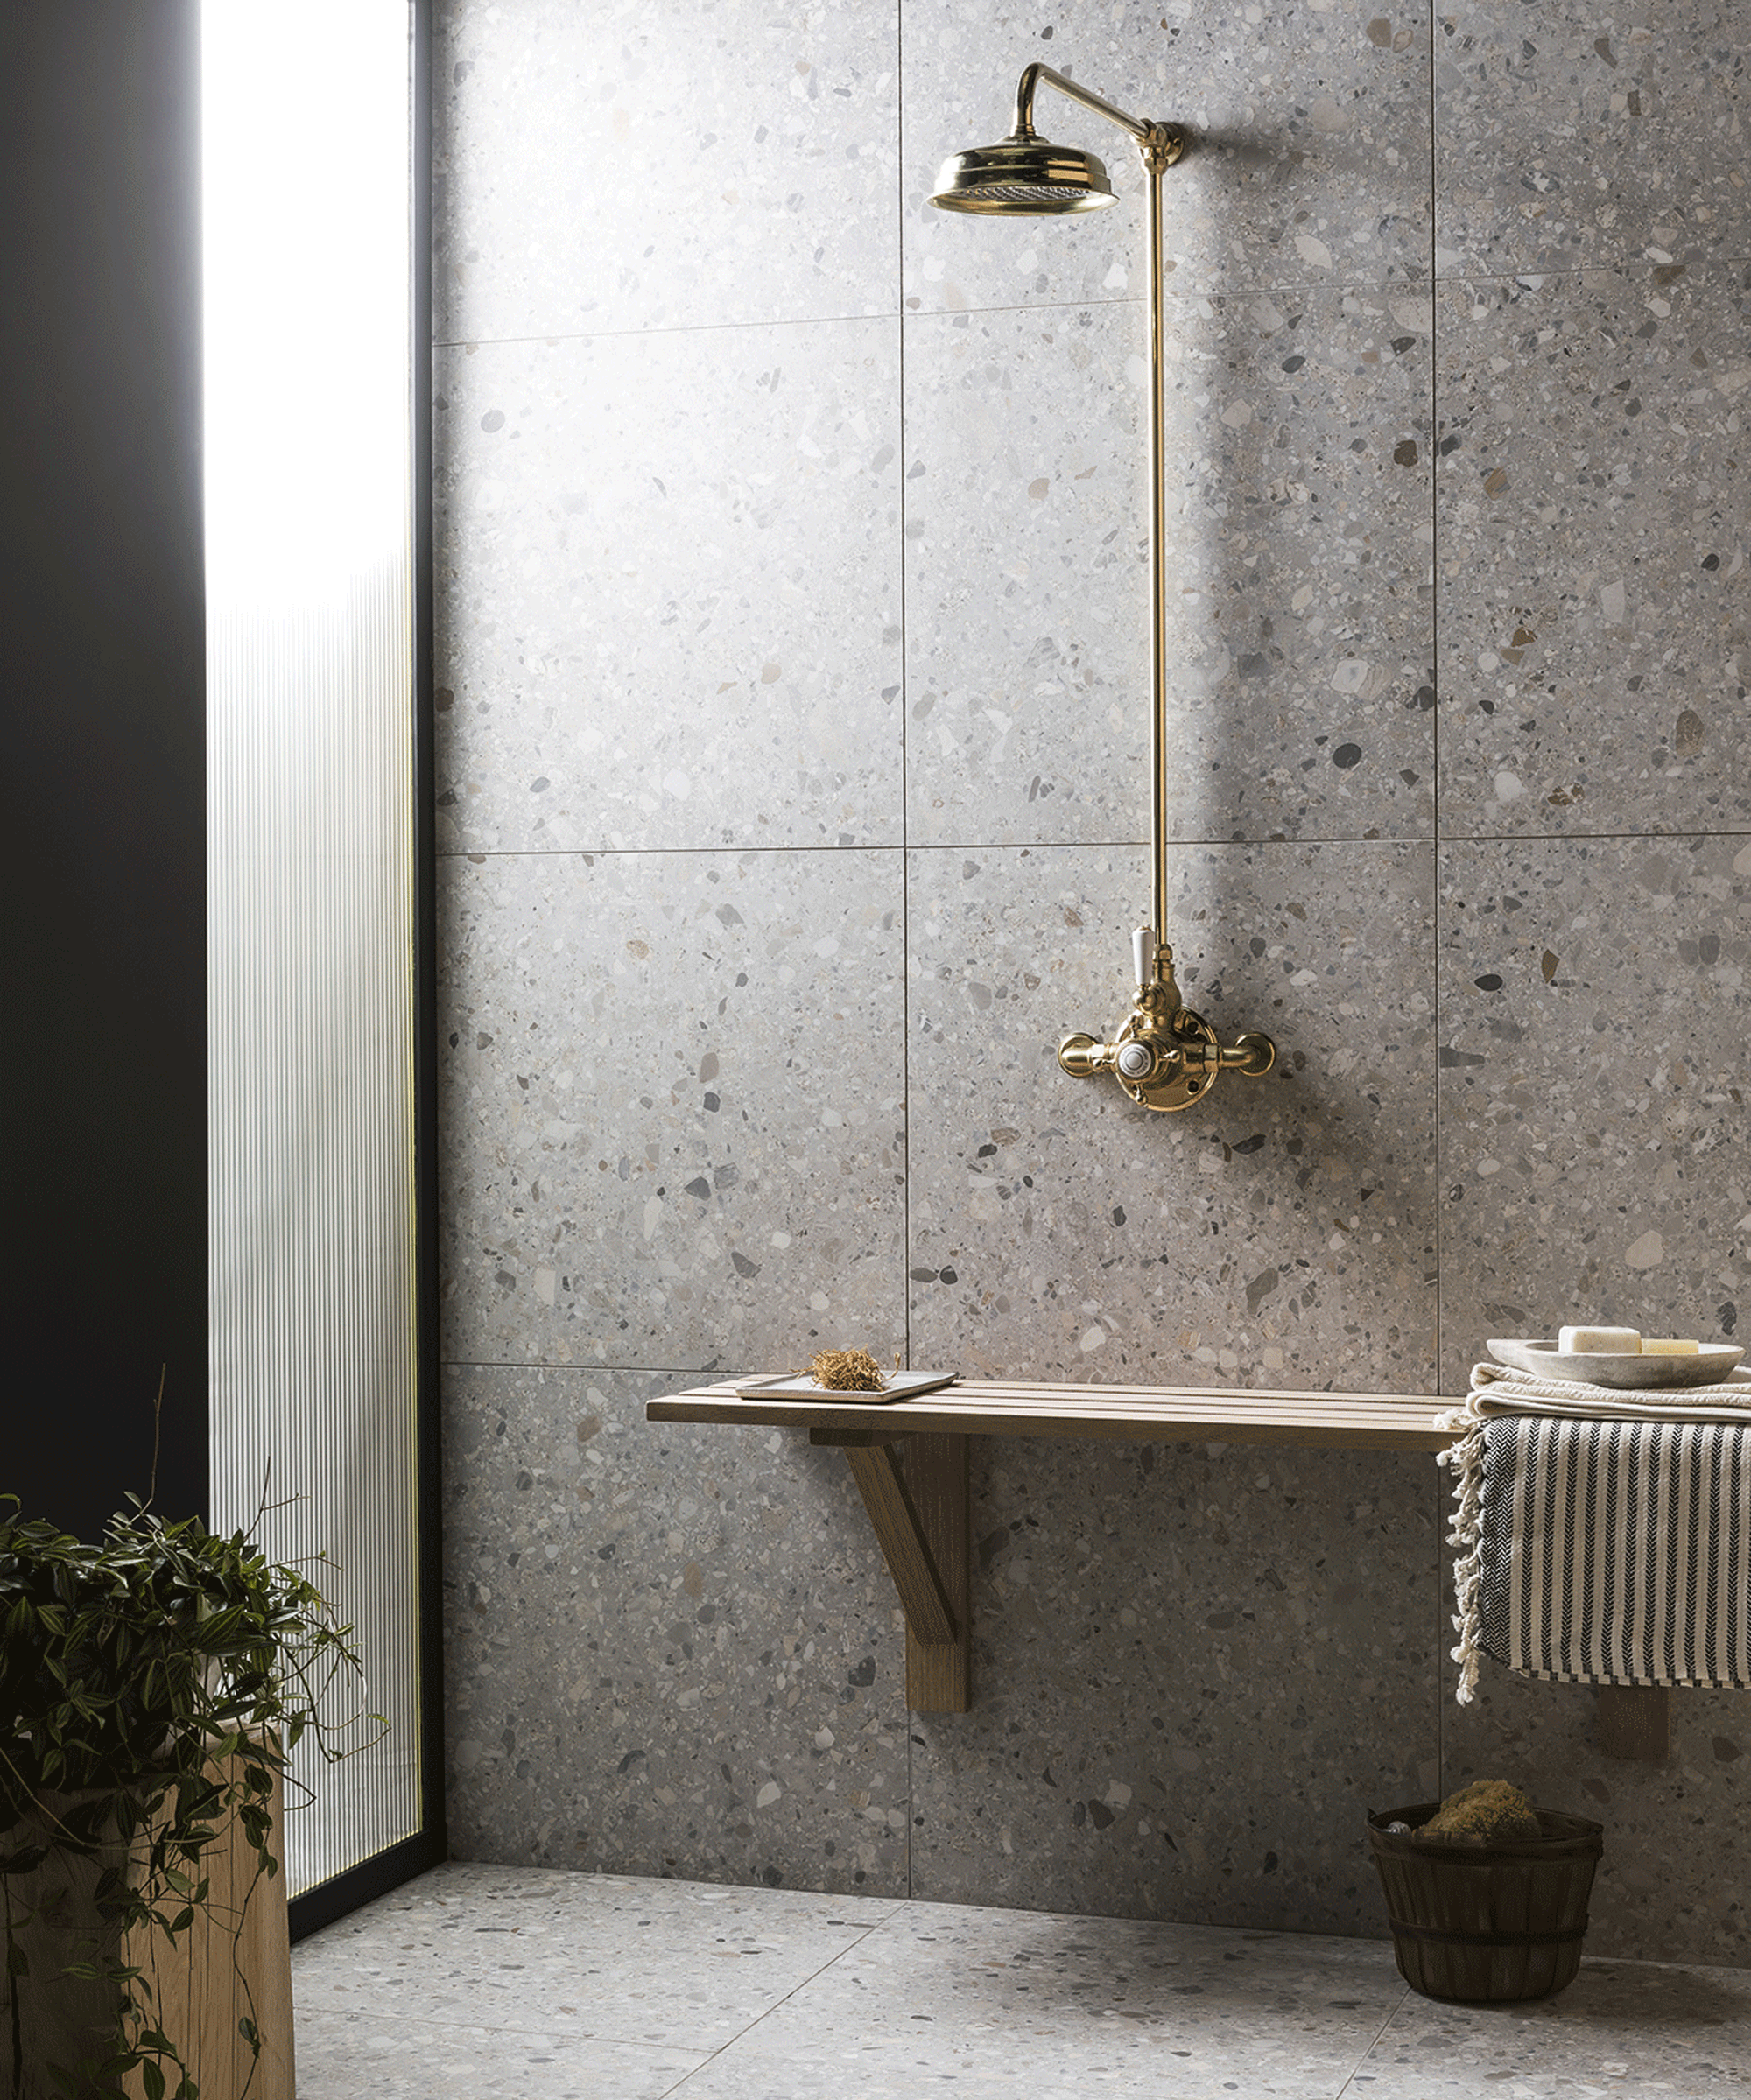 Wet room with minimal design